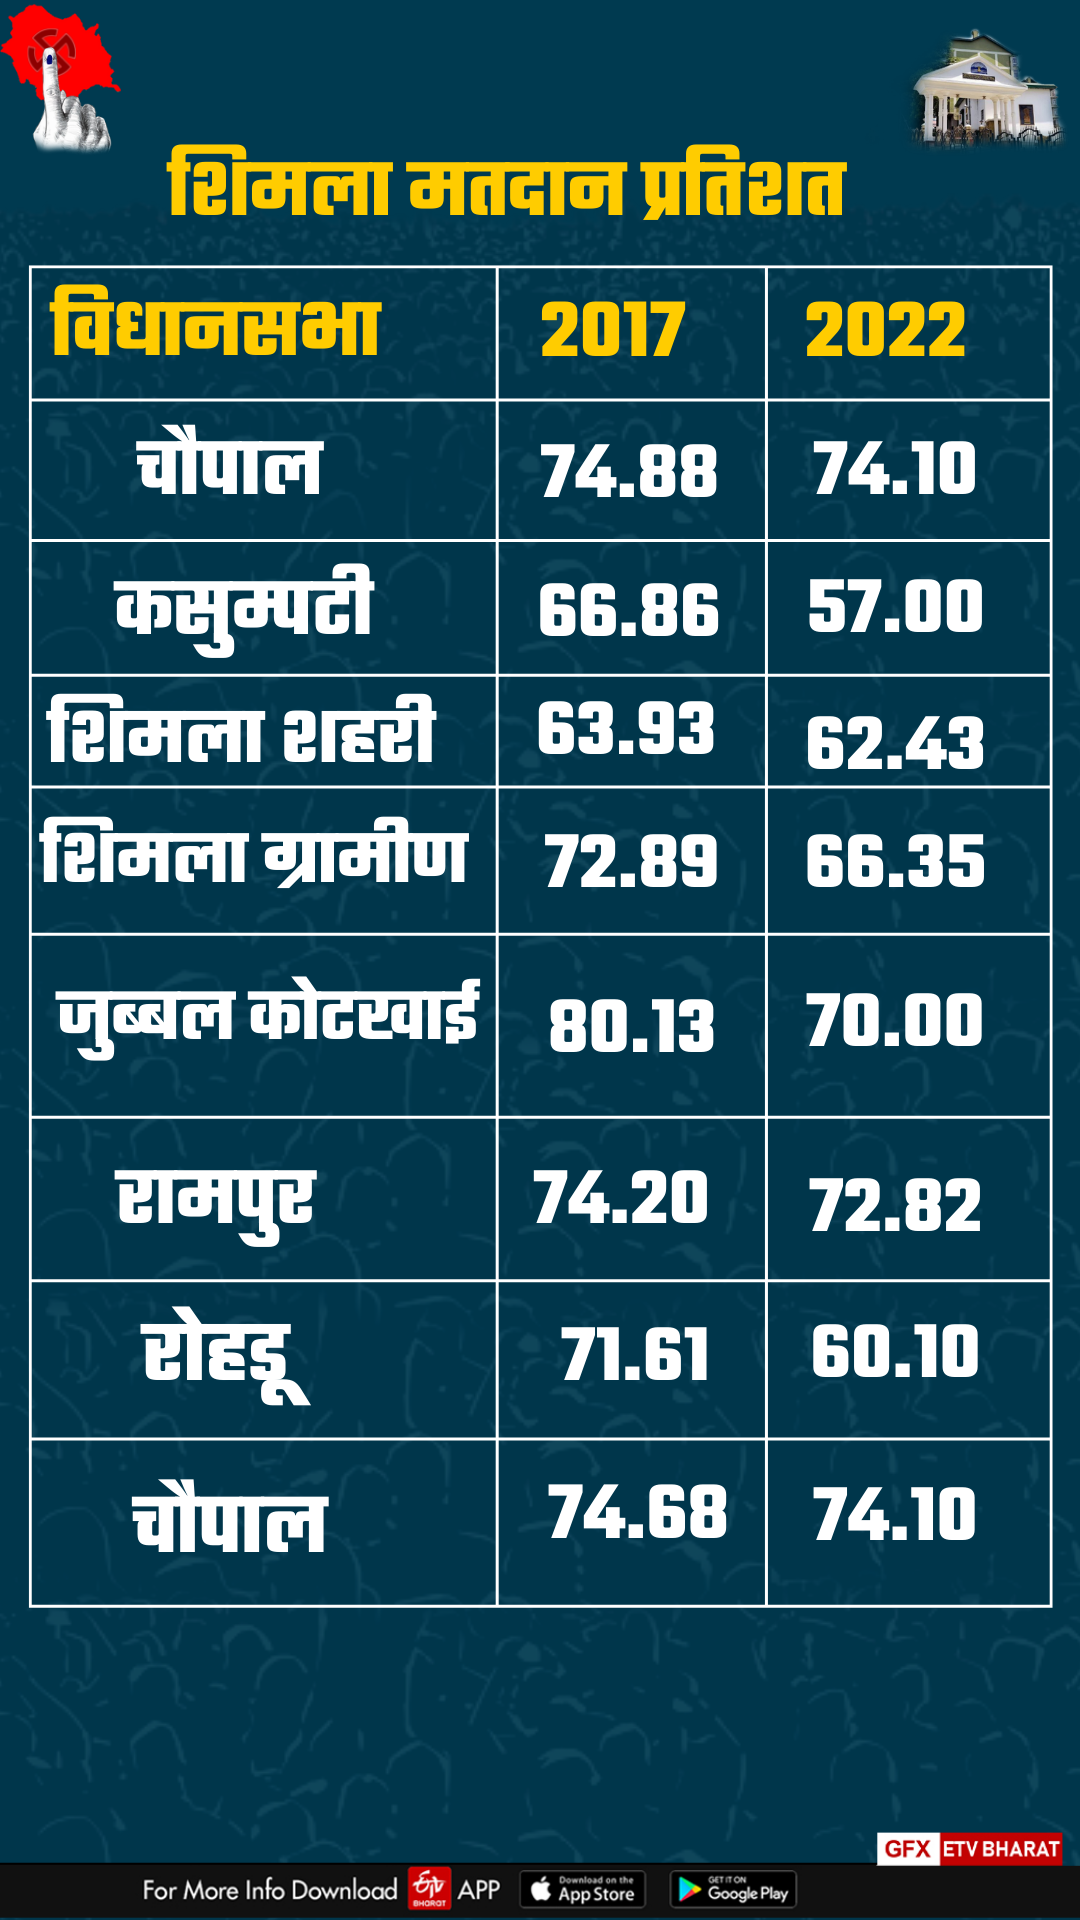 Shimla Polling Percentage